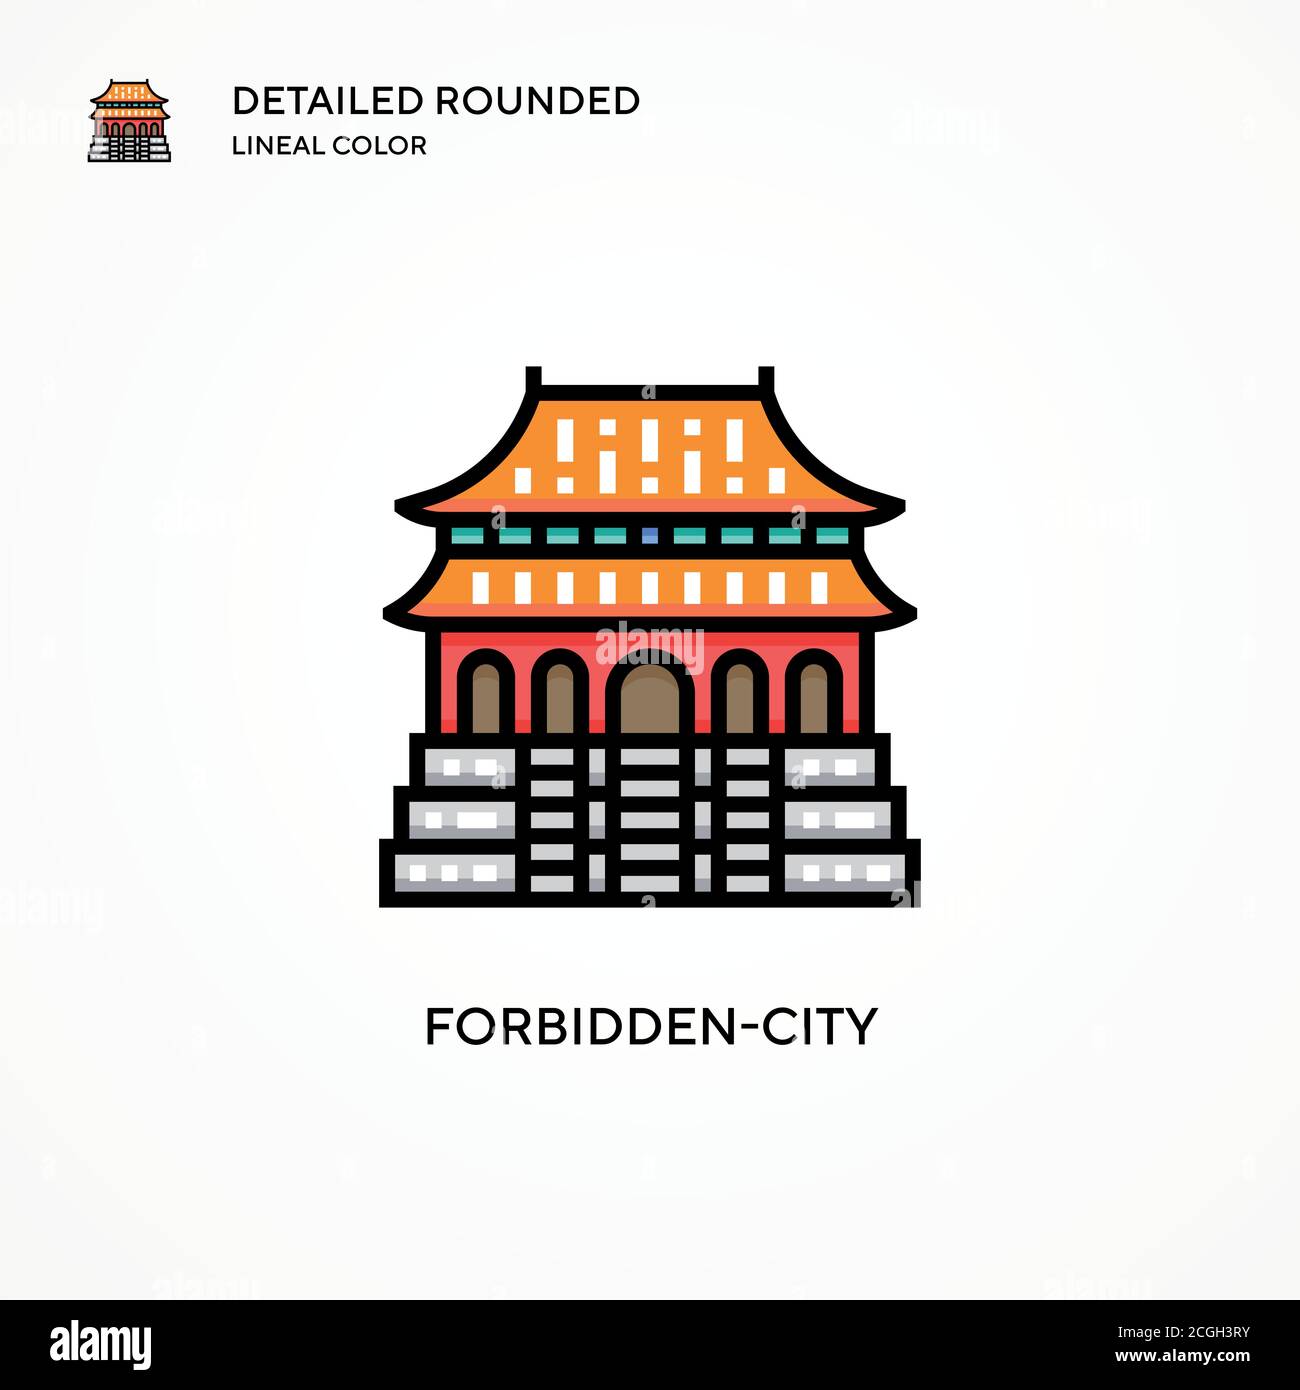 Forbidden-city vector icon. Modern vector illustration concepts. Easy to edit and customize. Stock Vector